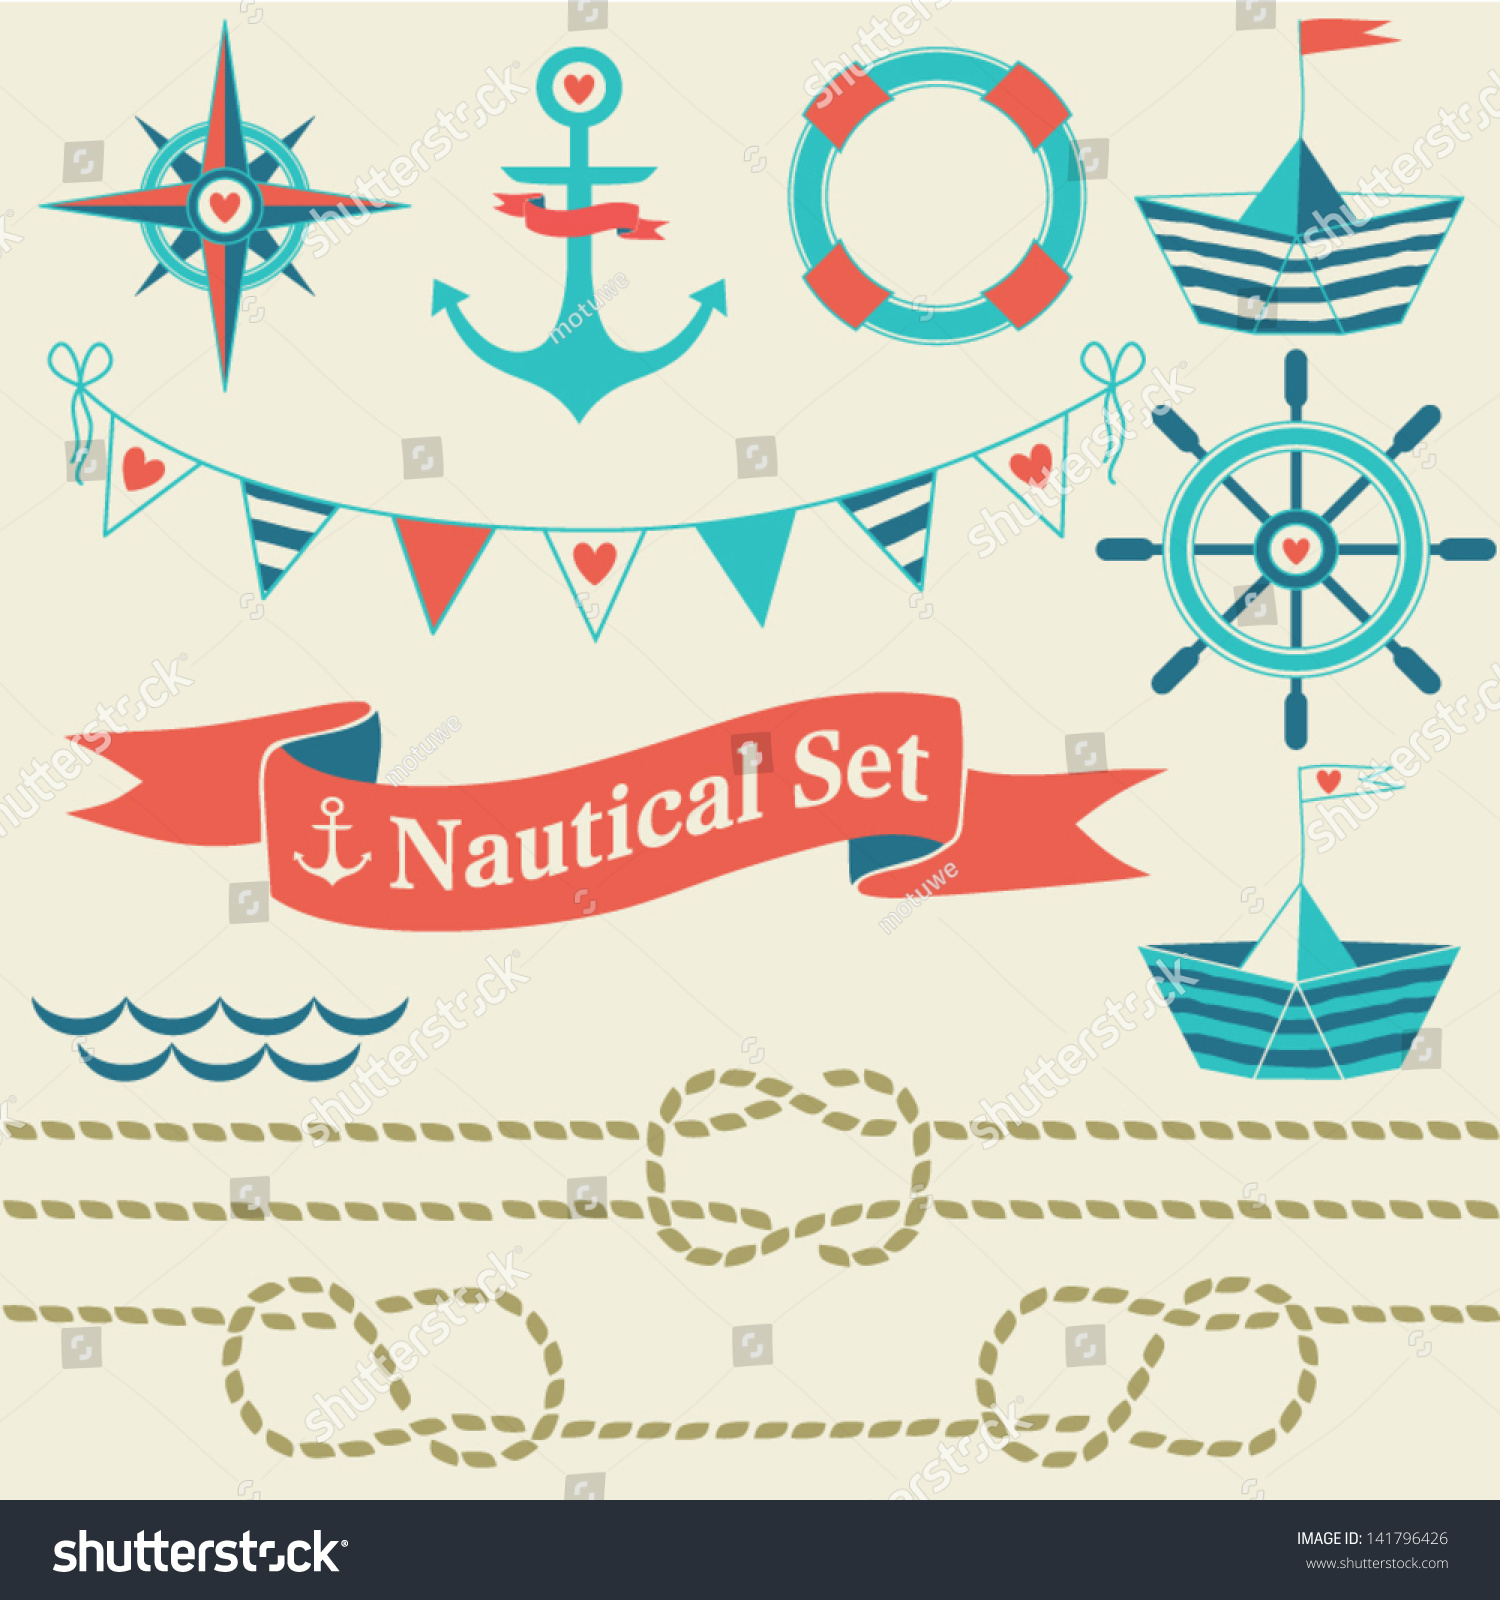 Collection Nautical Symbols Cartoon Nautical Icons: เวกเตอร์สต็อก (ปลอด